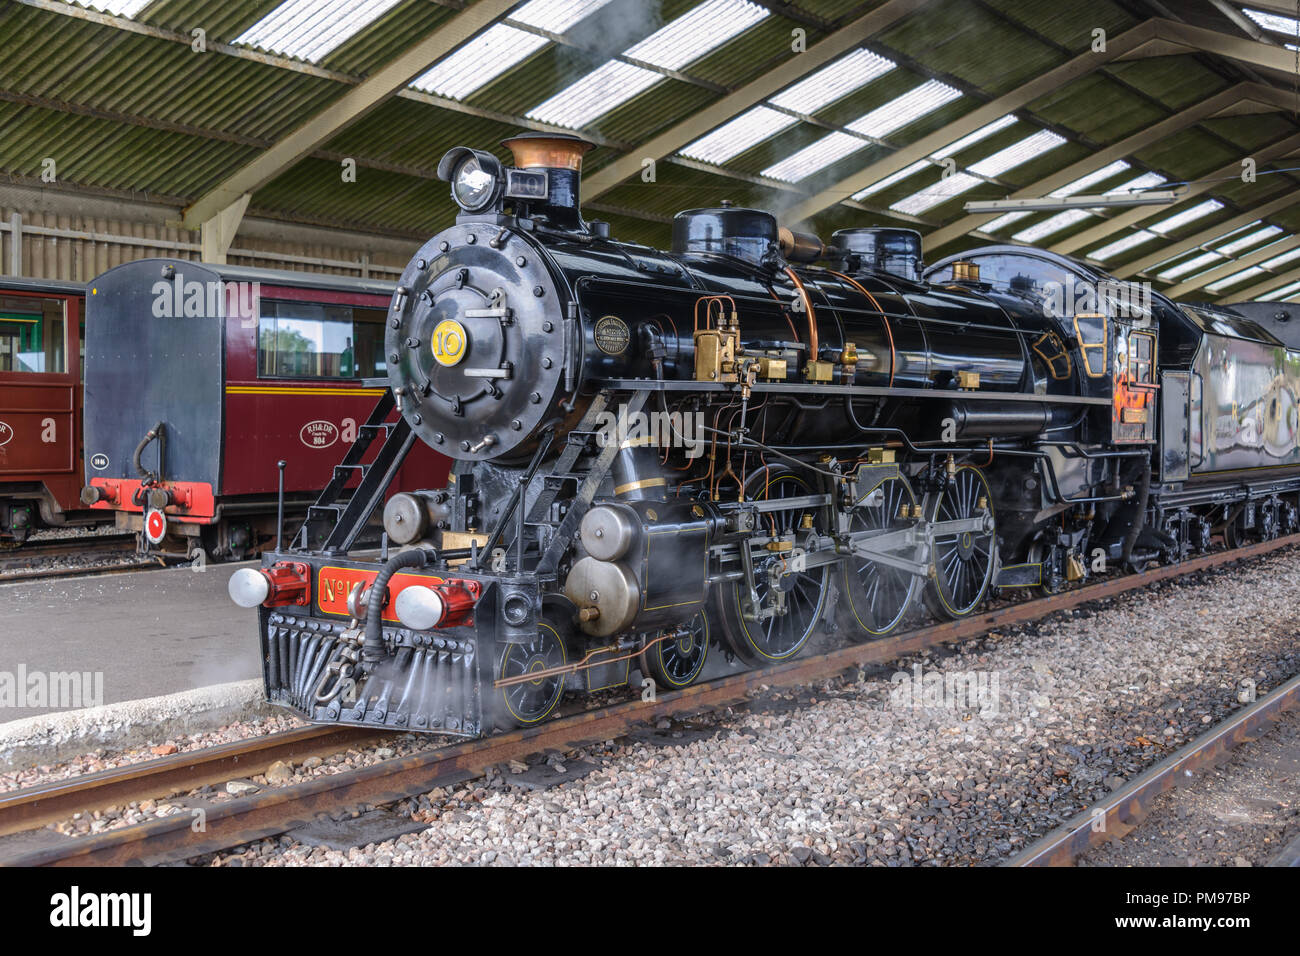 Romney, Hythe & Dymchurch Railway, New Romney, Kent, Großbritannien Stockfoto